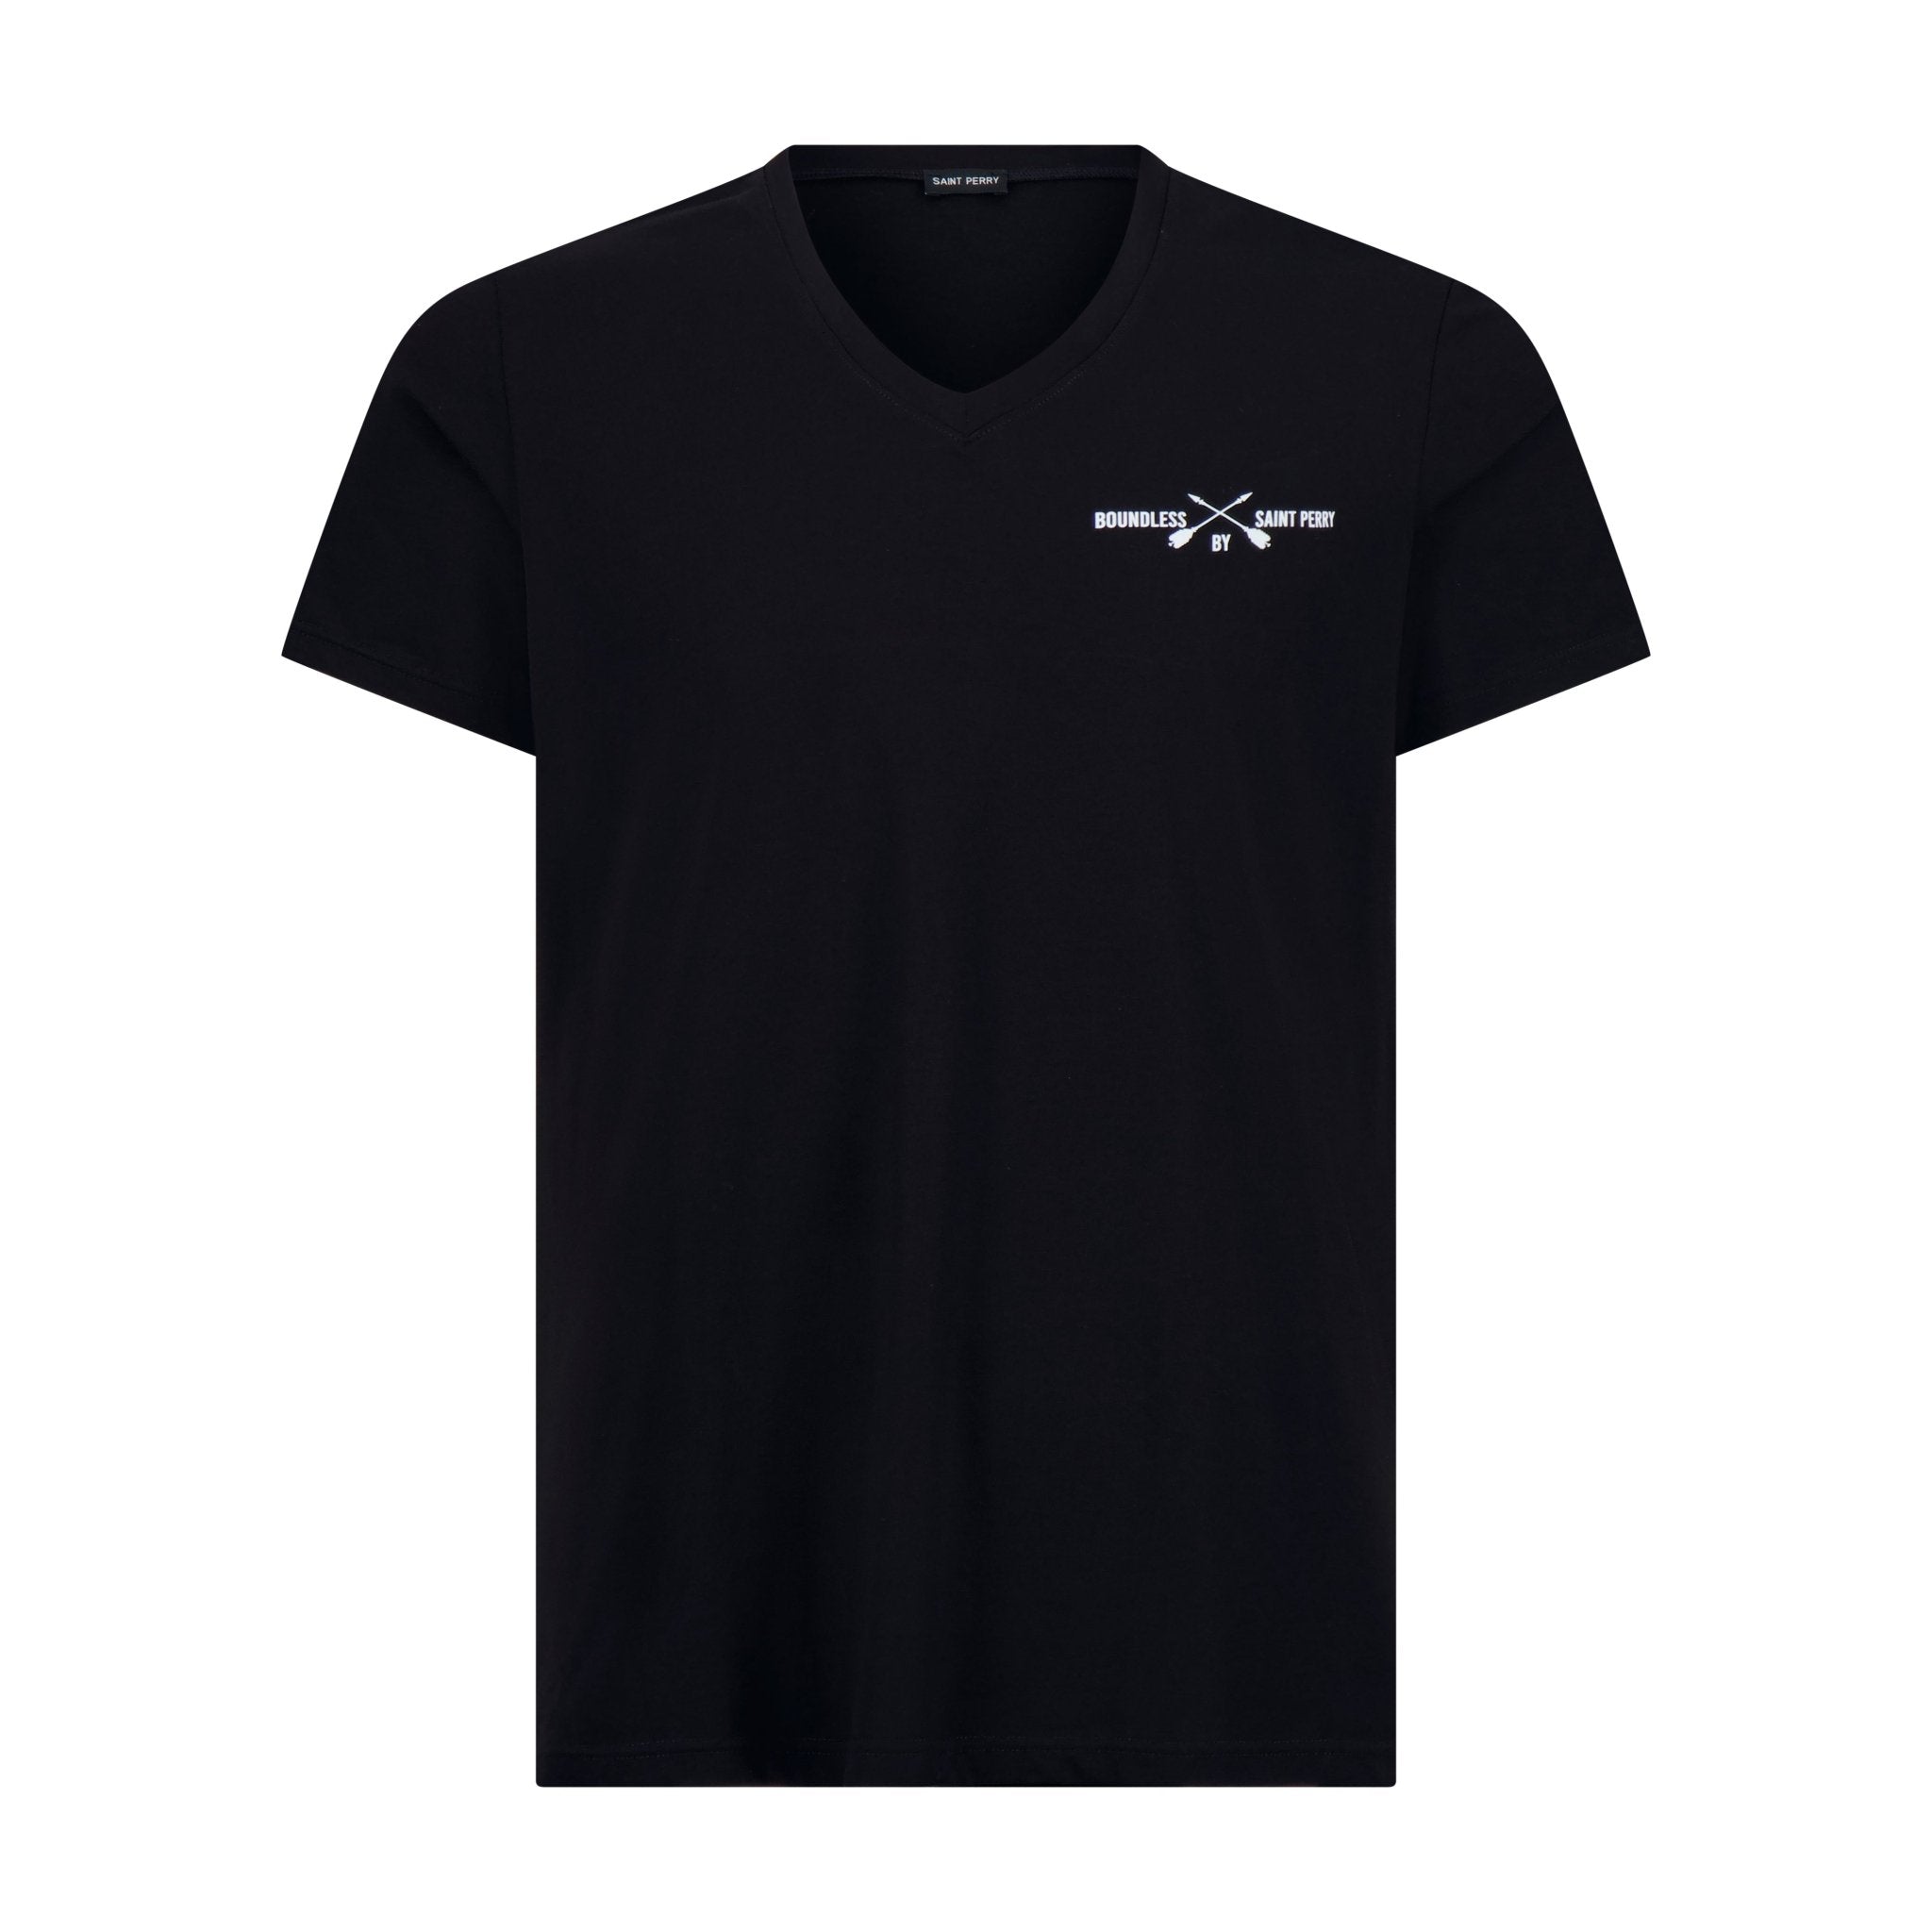 Men's V-Neck Black T-Shirt - SAINT PERRY